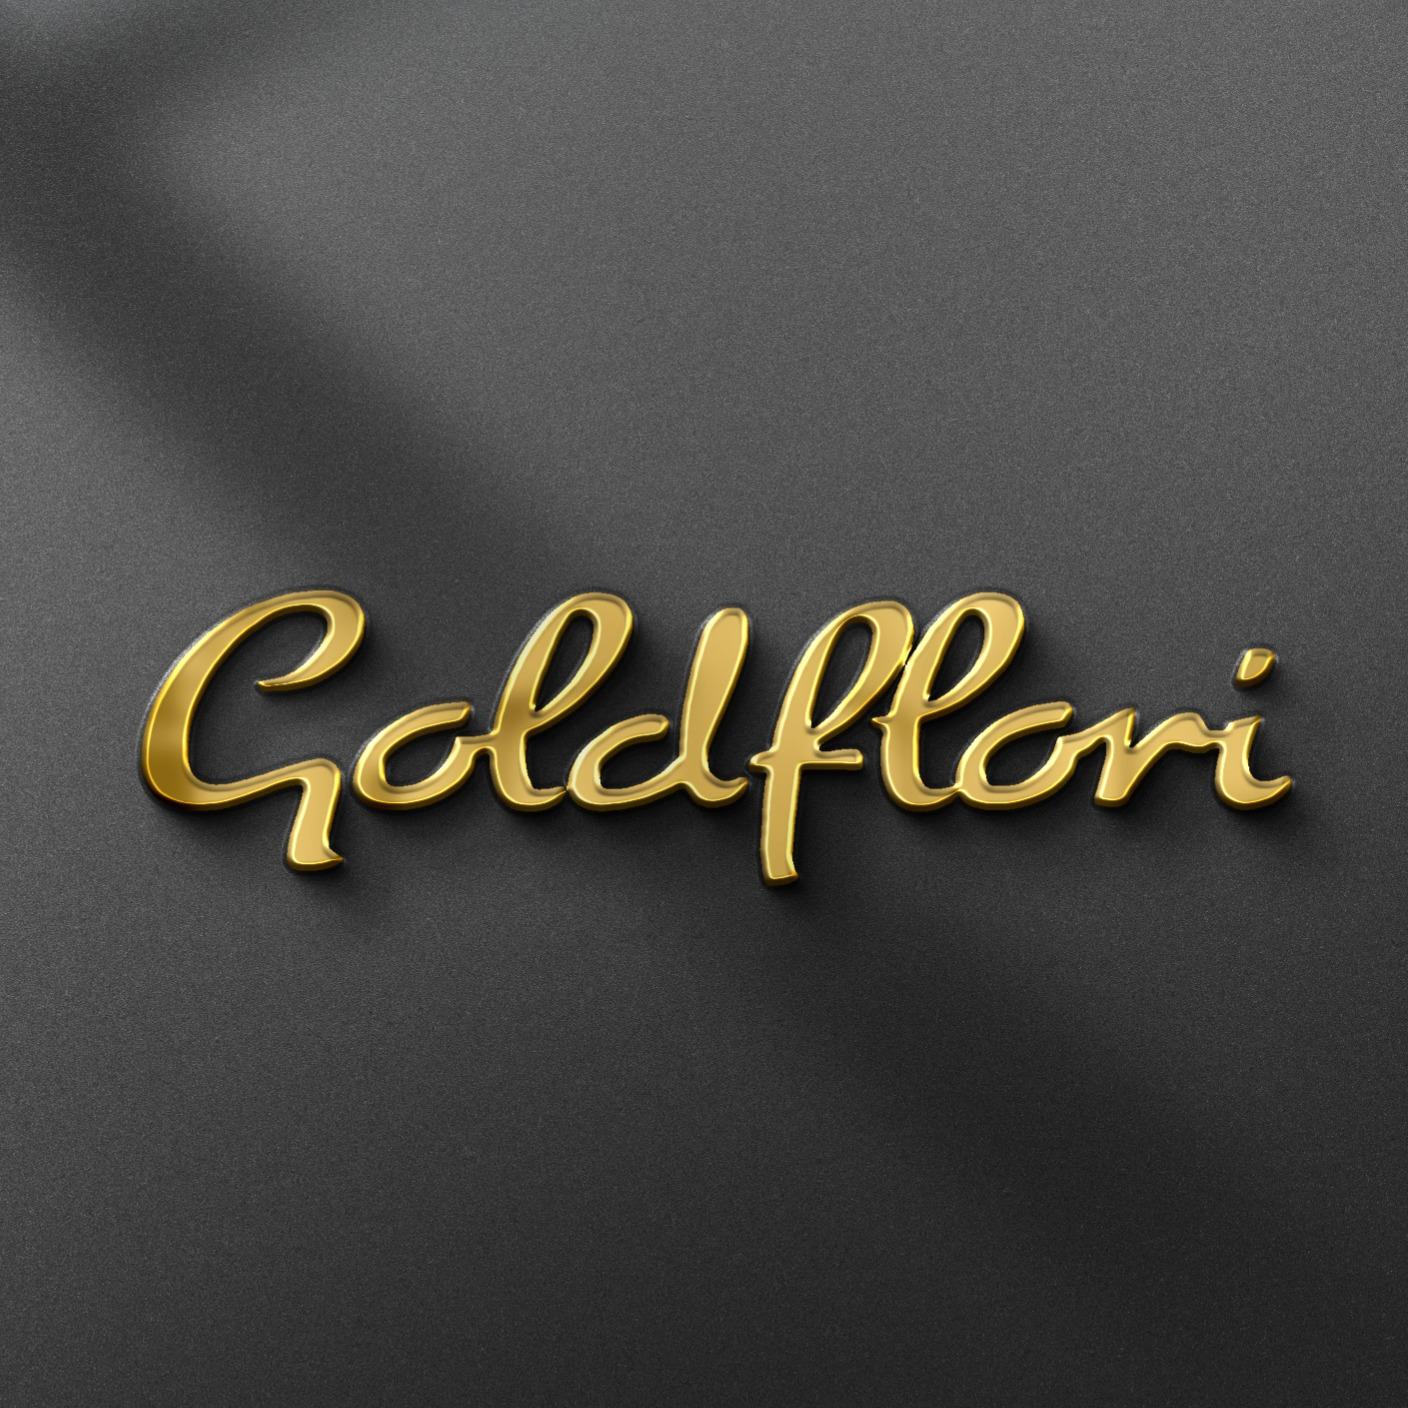 Goldankauf München Goldflori - Gold Dealer - München - 089 296862 Germany | ShowMeLocal.com